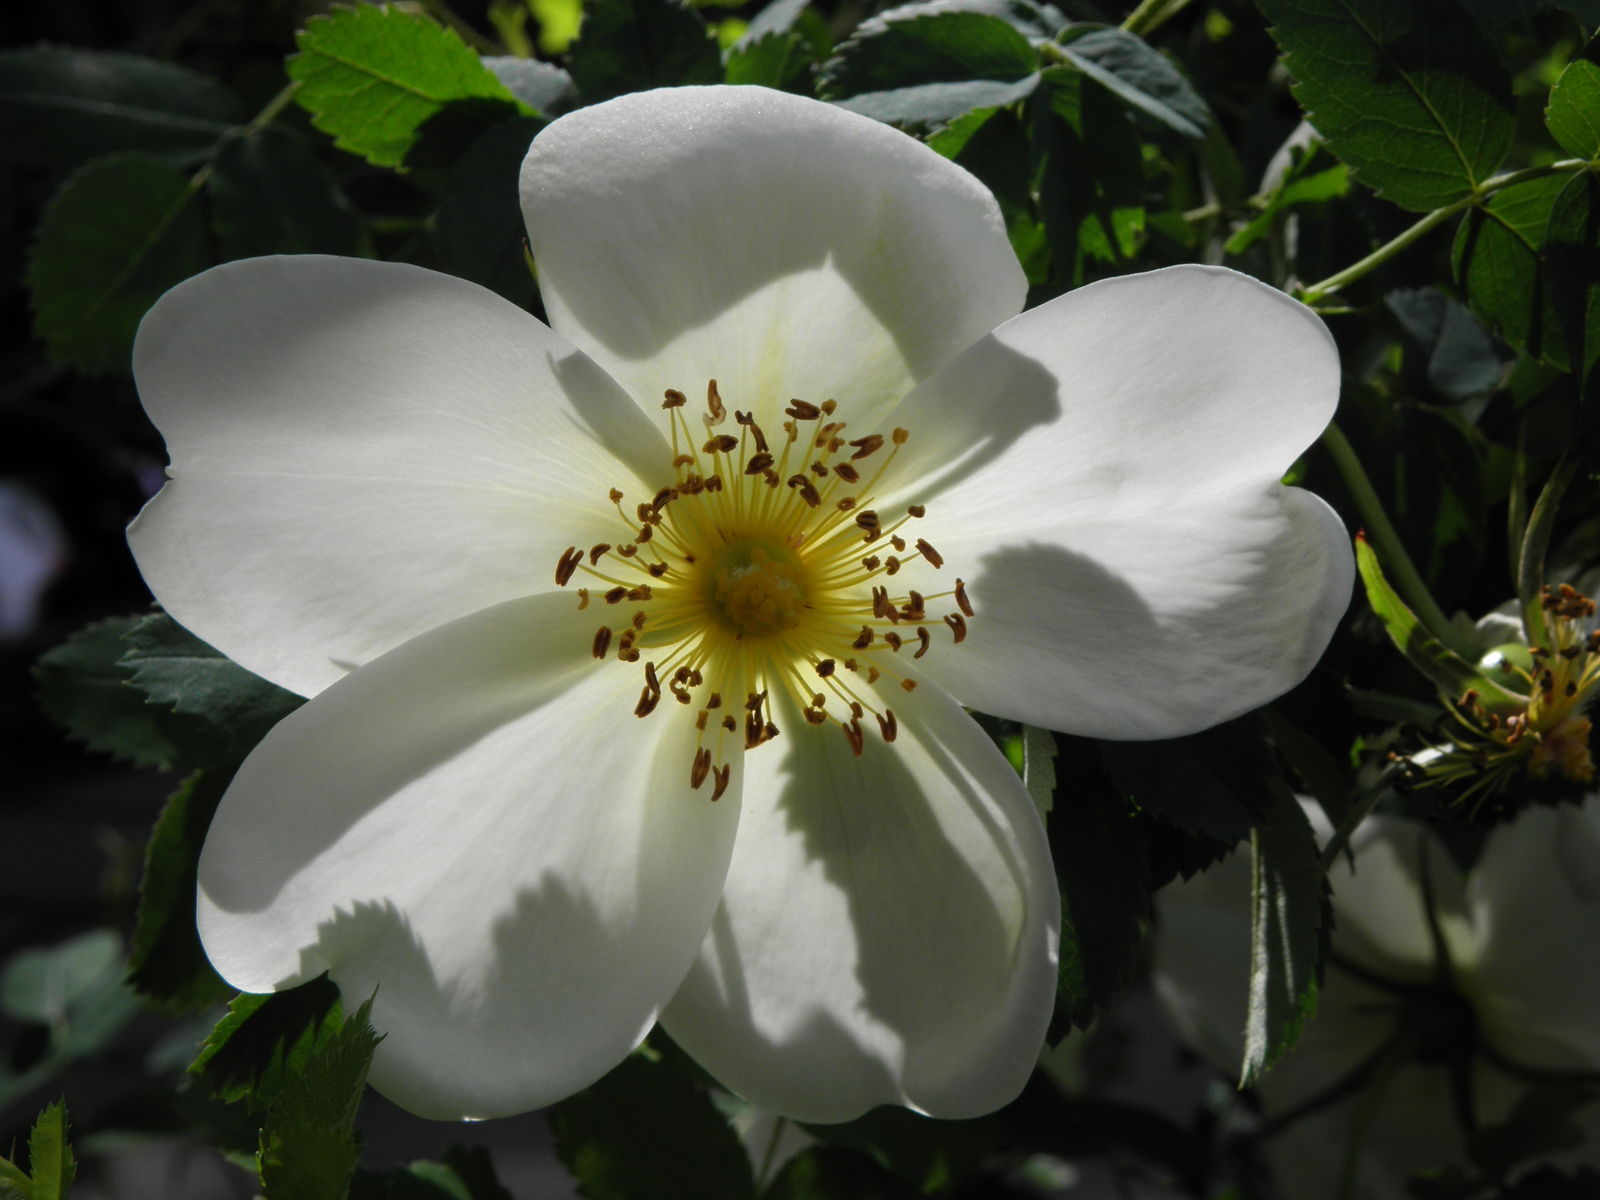 Rosa spinosissima